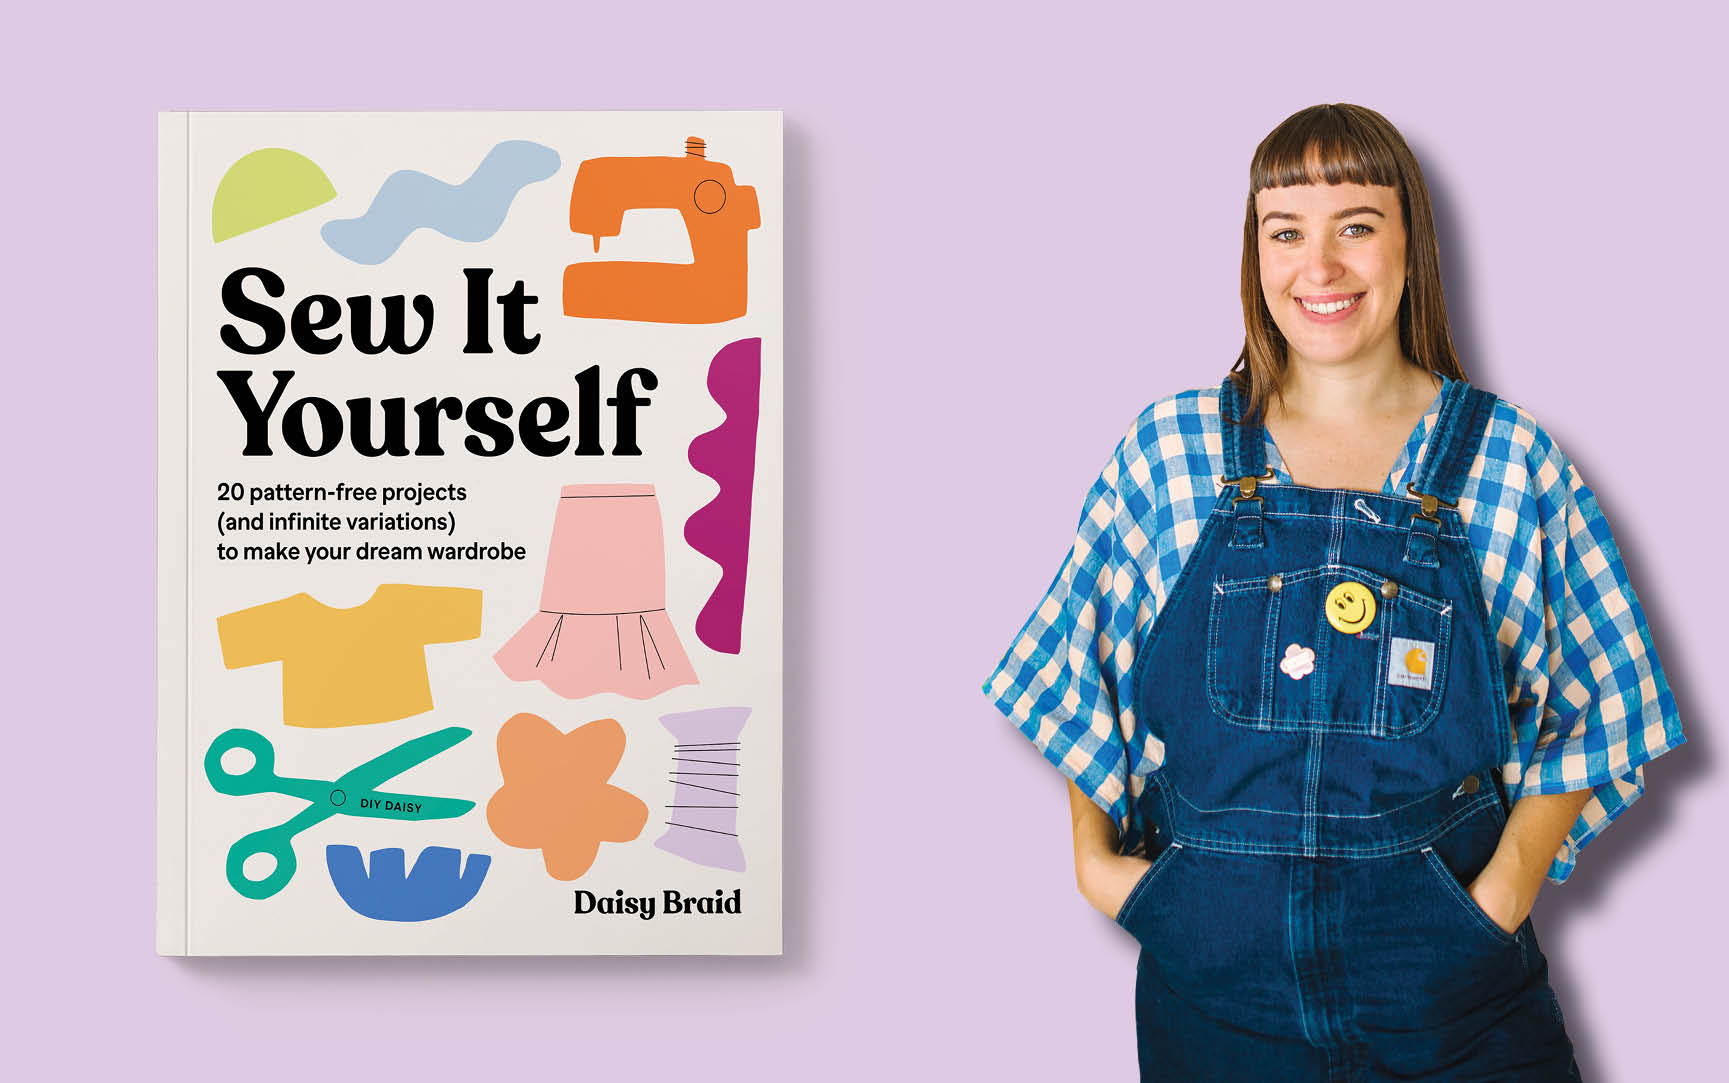 QLD: Sew It Yourself – Meet DIY Daisy